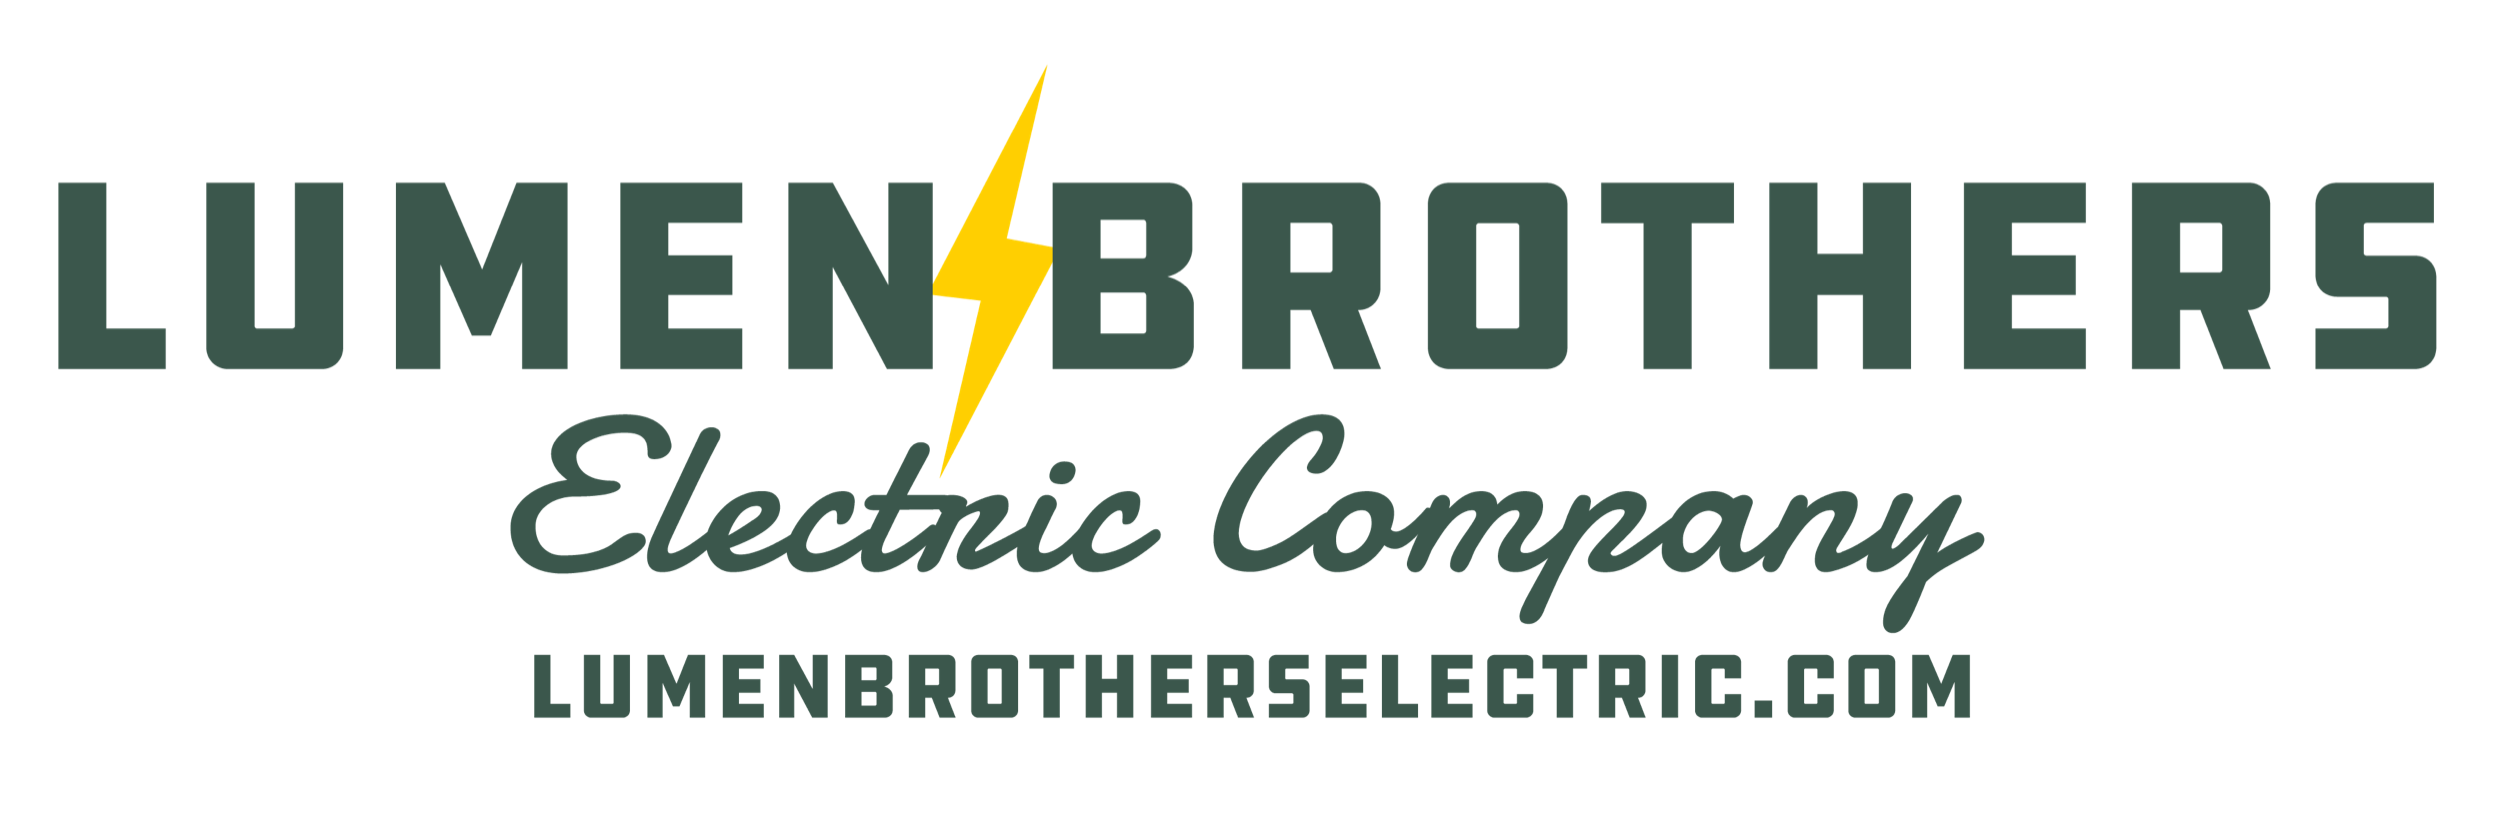 Lumen Brothers Electric